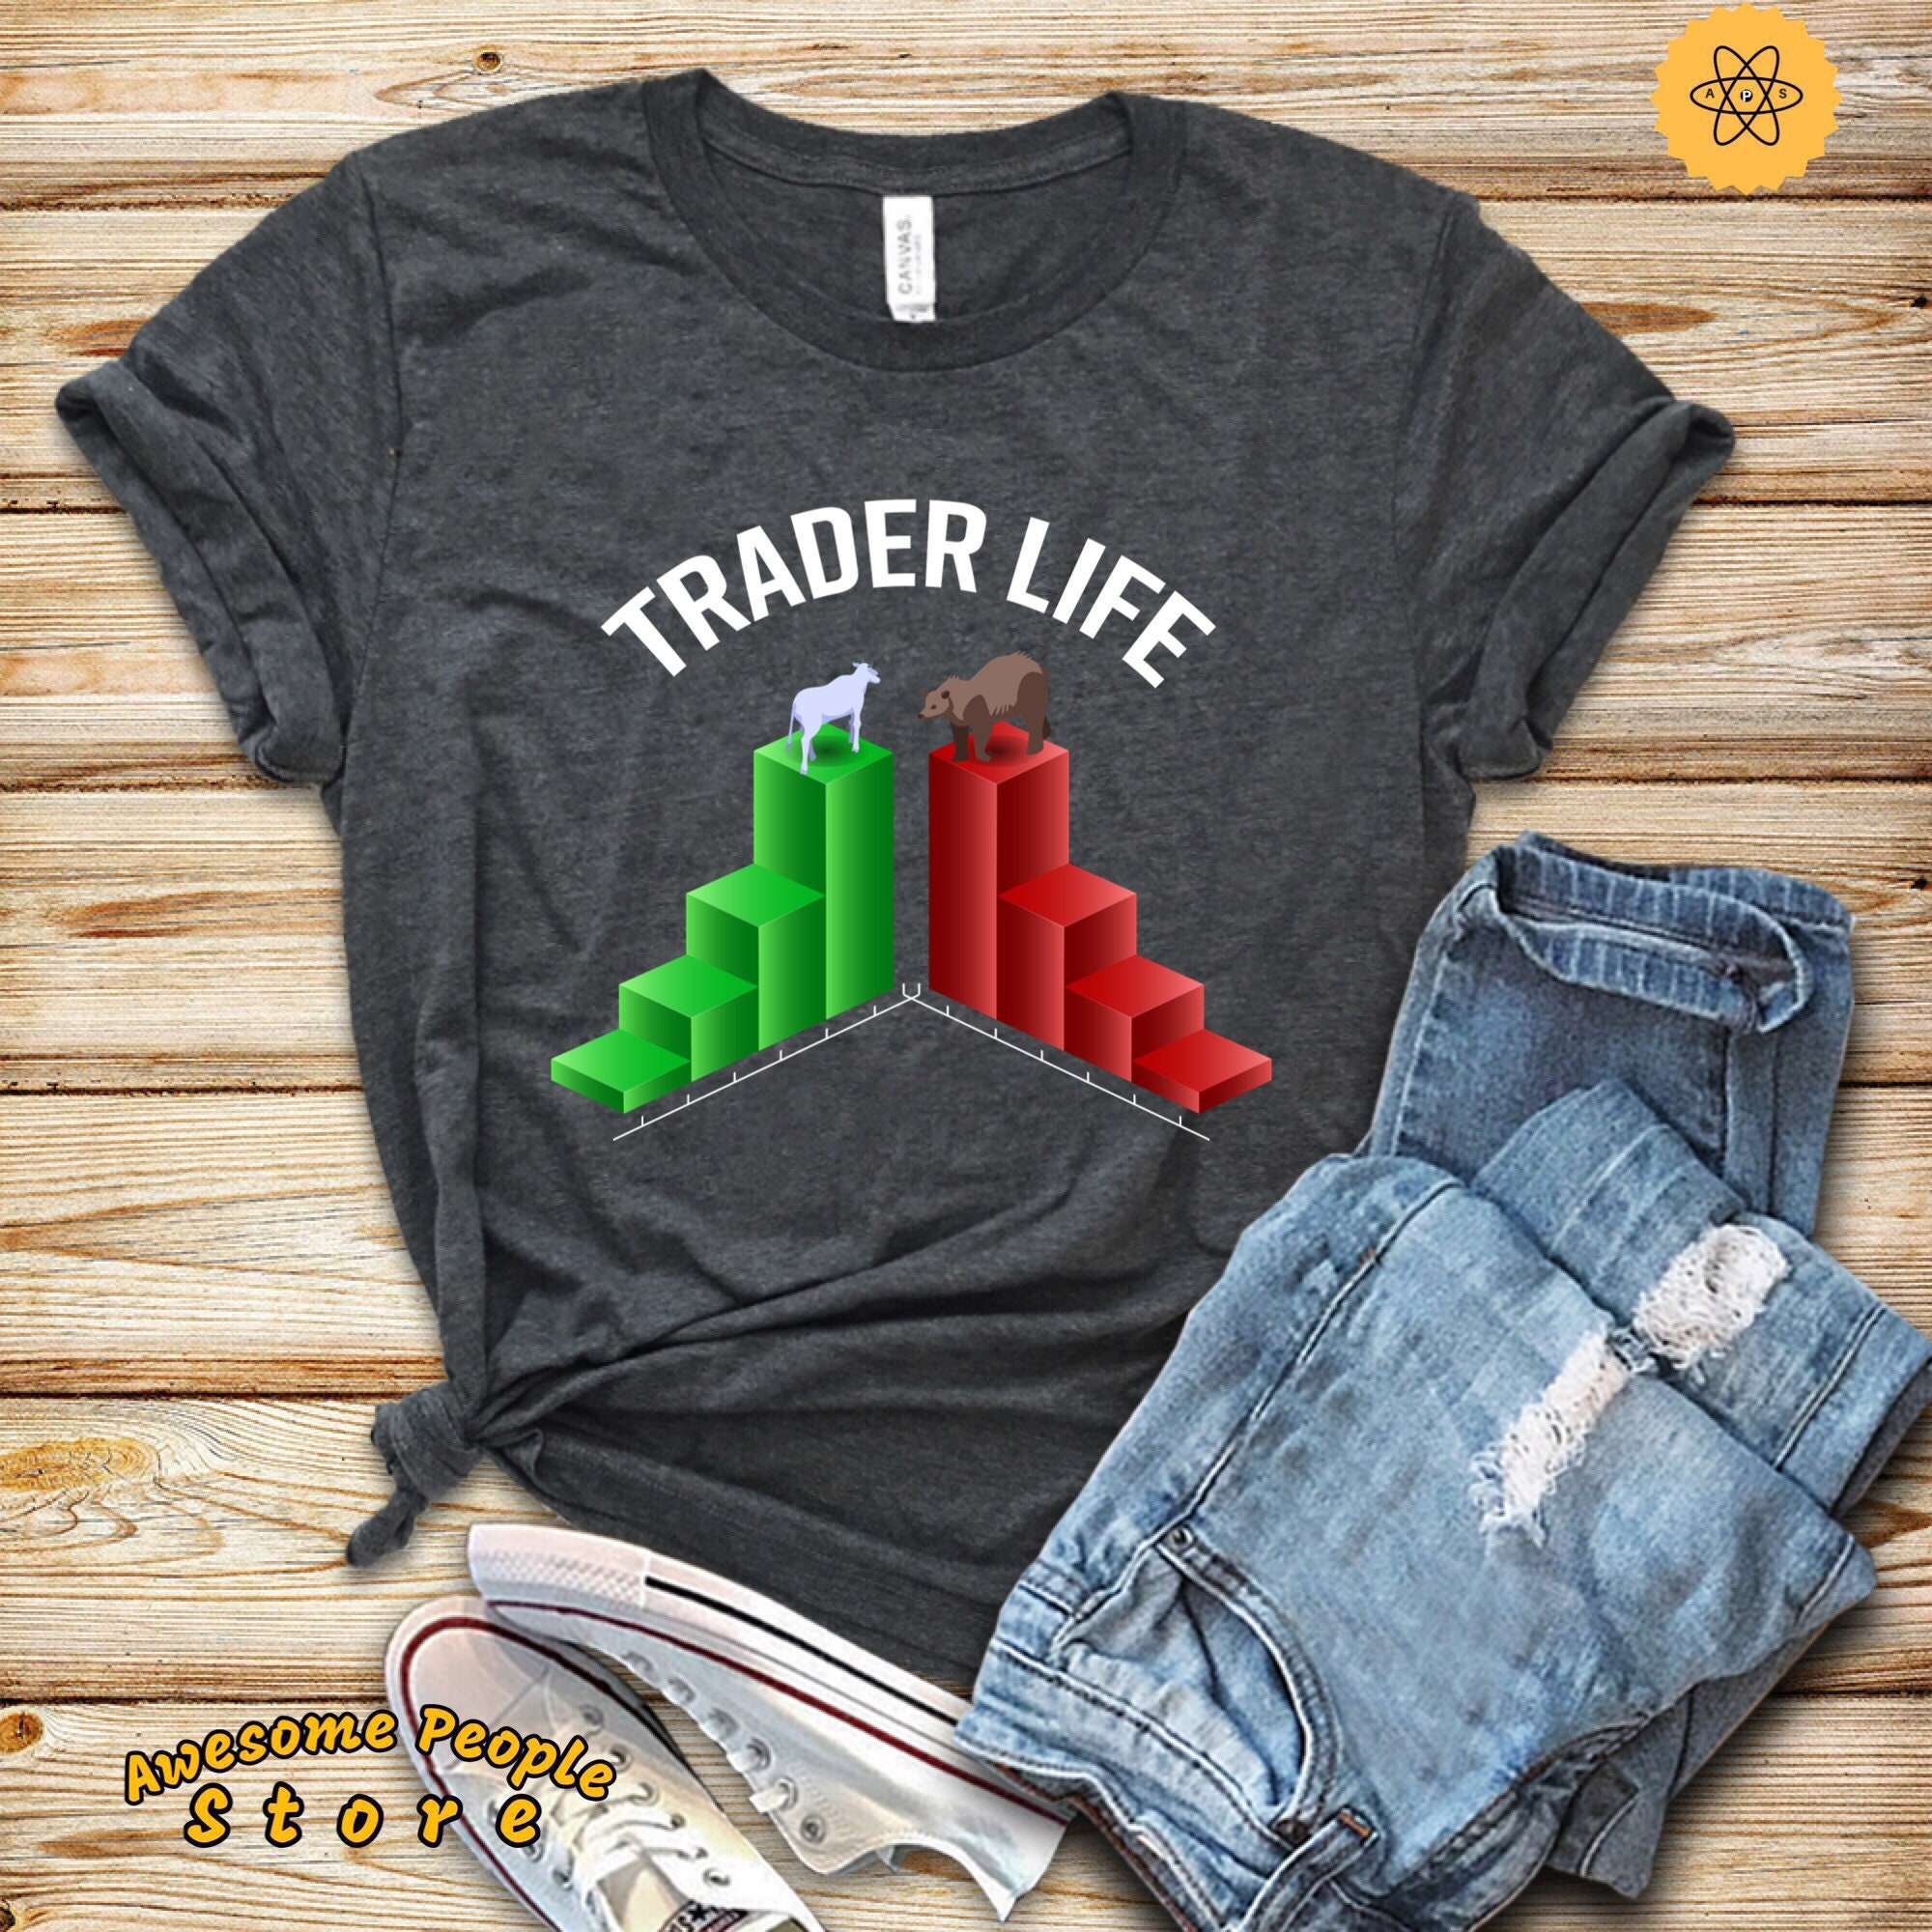 Stock Market, Stock Market Shirt, Trader Life, Trading Lover Shirt ...